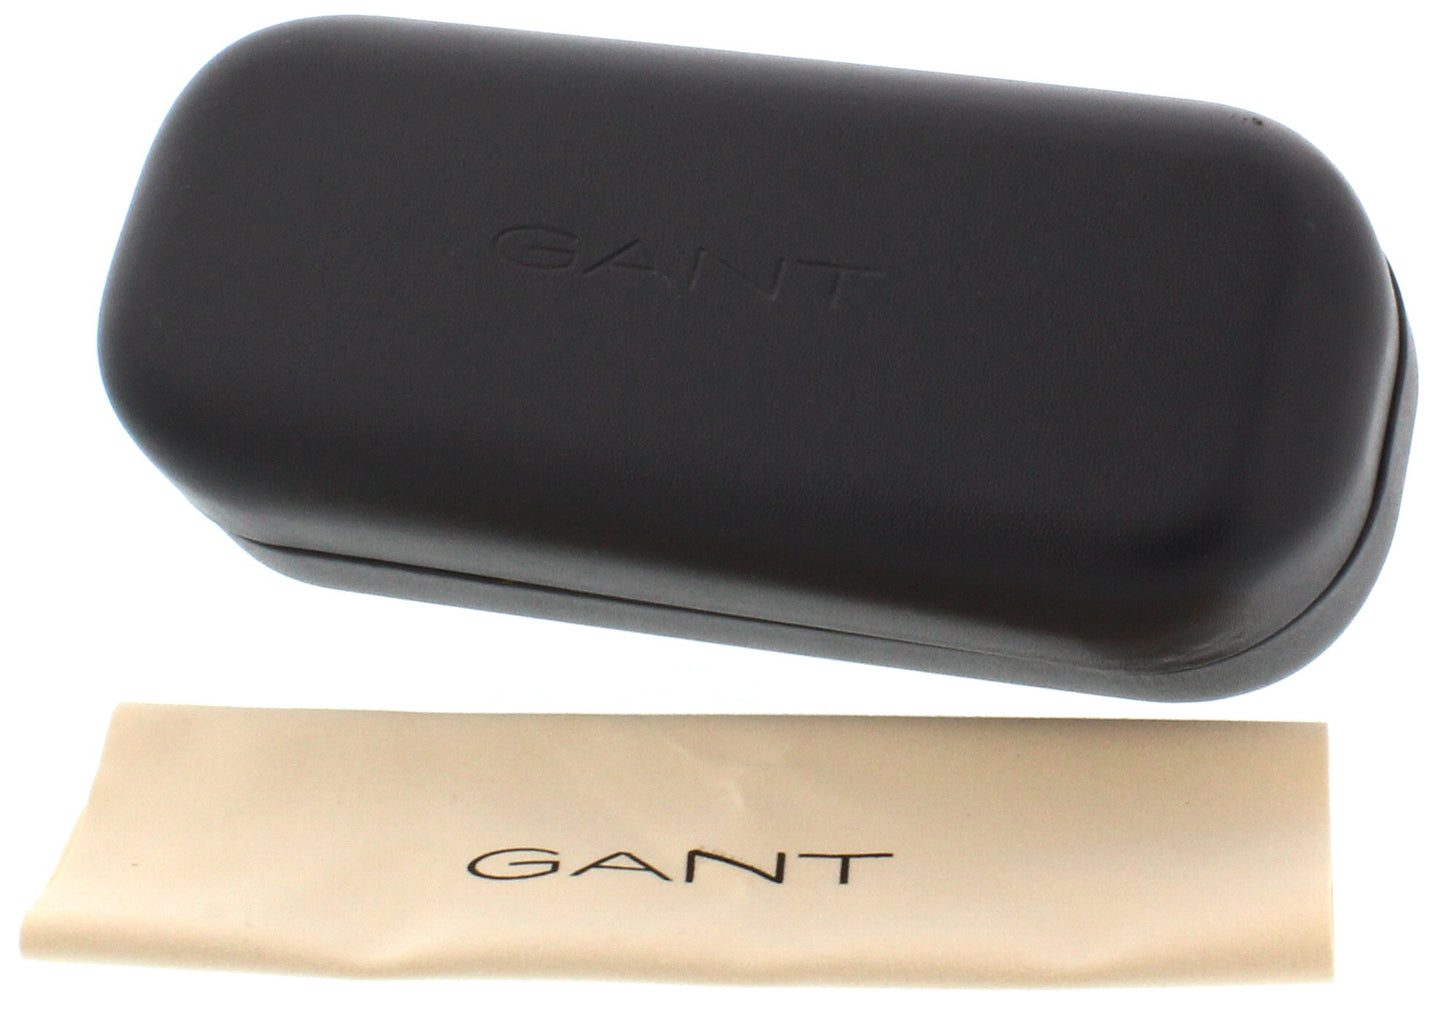 GANT GA3280-091 56mm New Eyeglasses